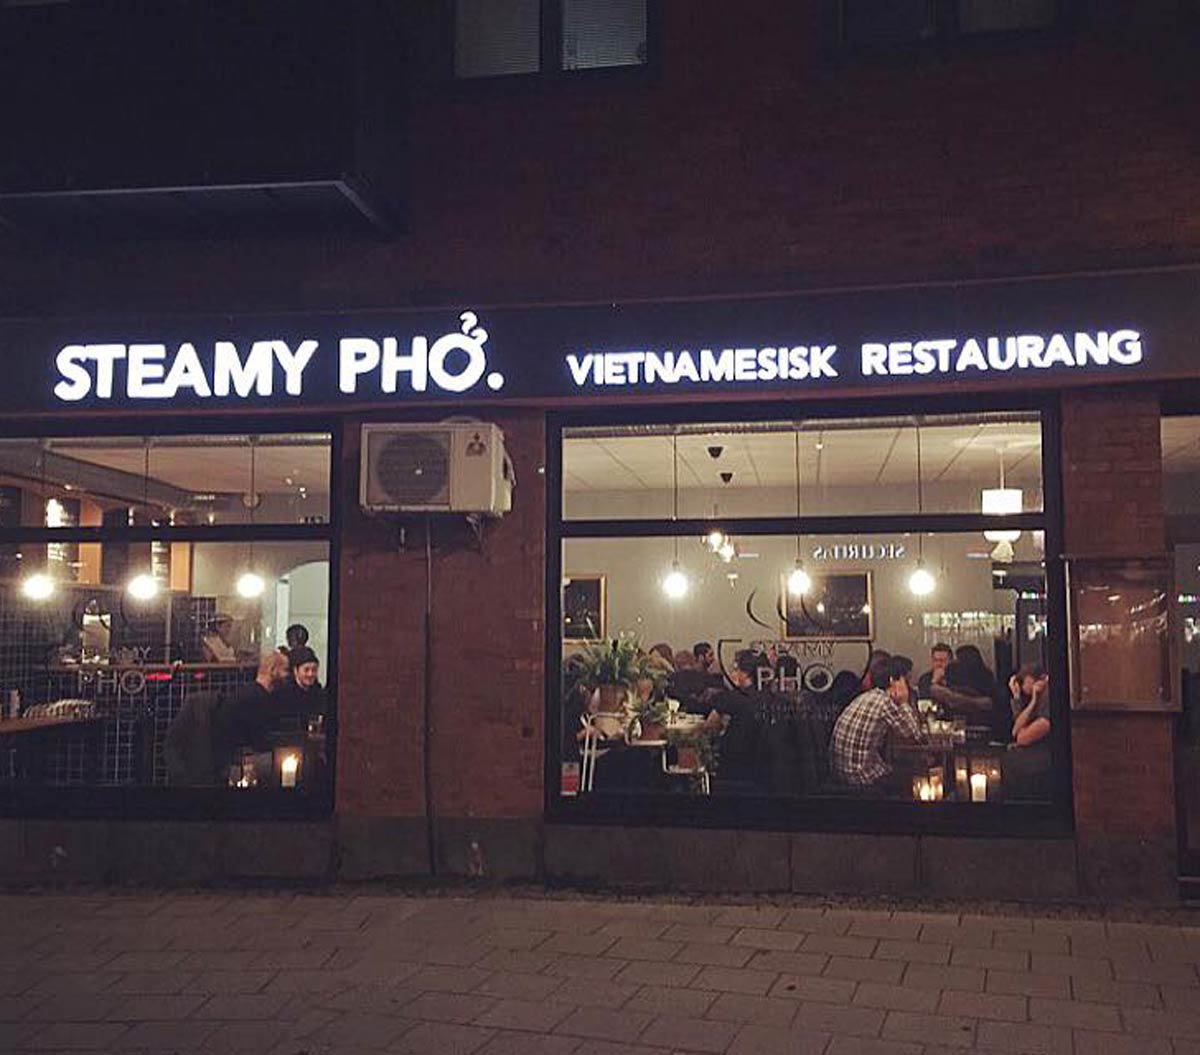 This Vietnamese restaurant in Sweden